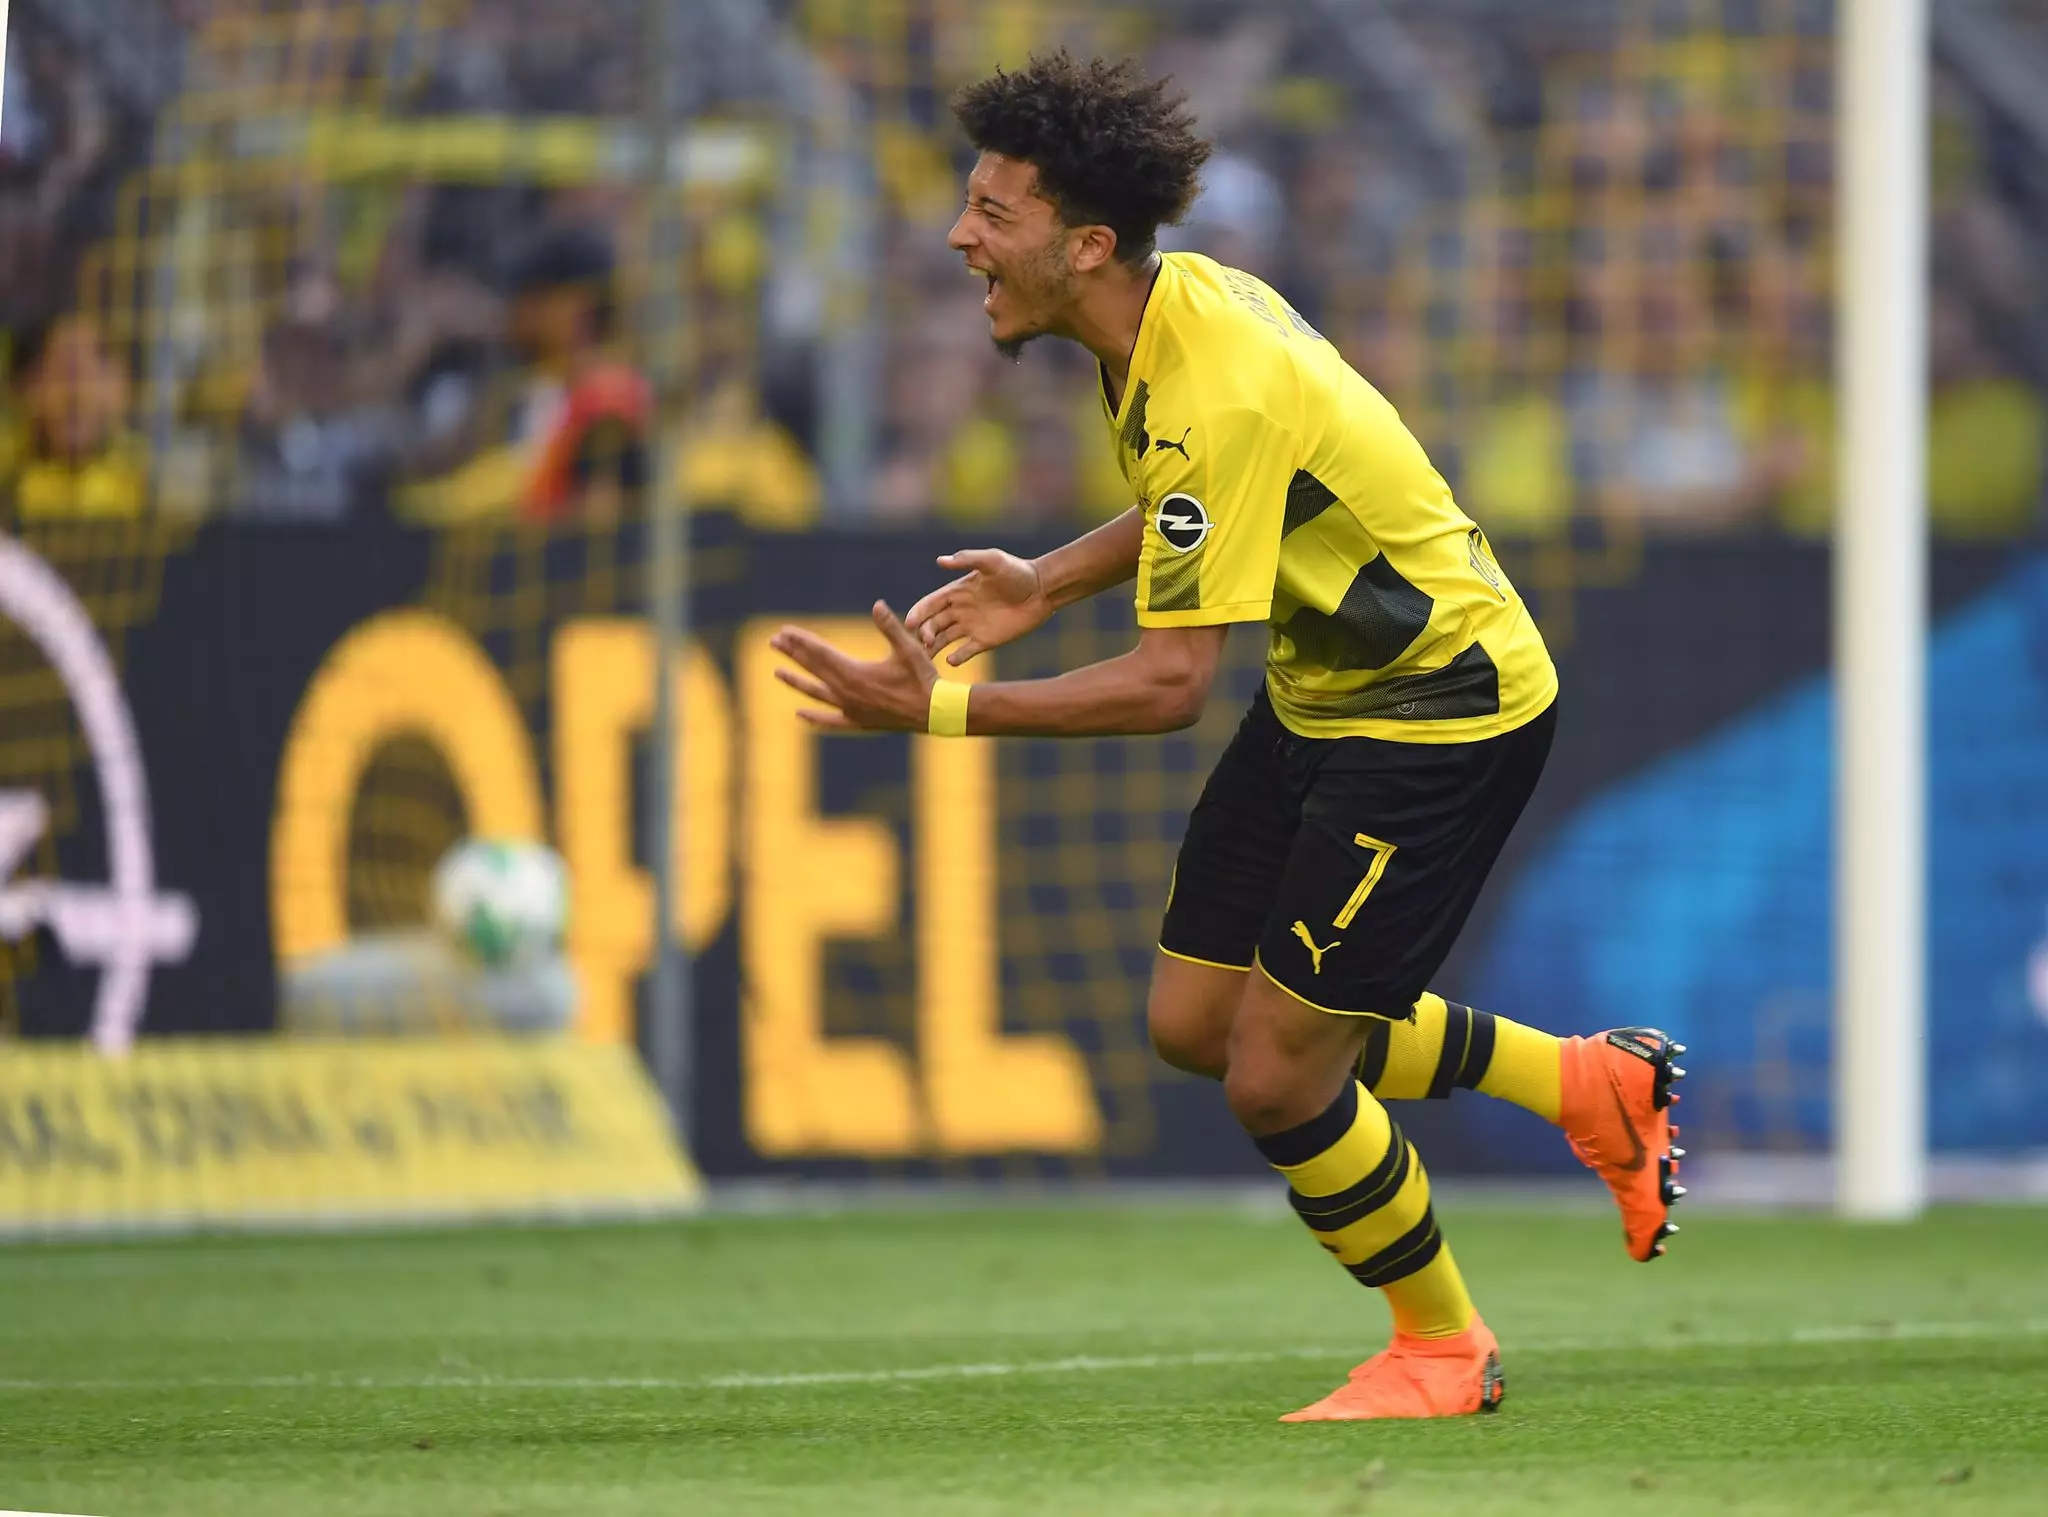 Sancho celebrates scoring a goal for Dortmund. Image: PA